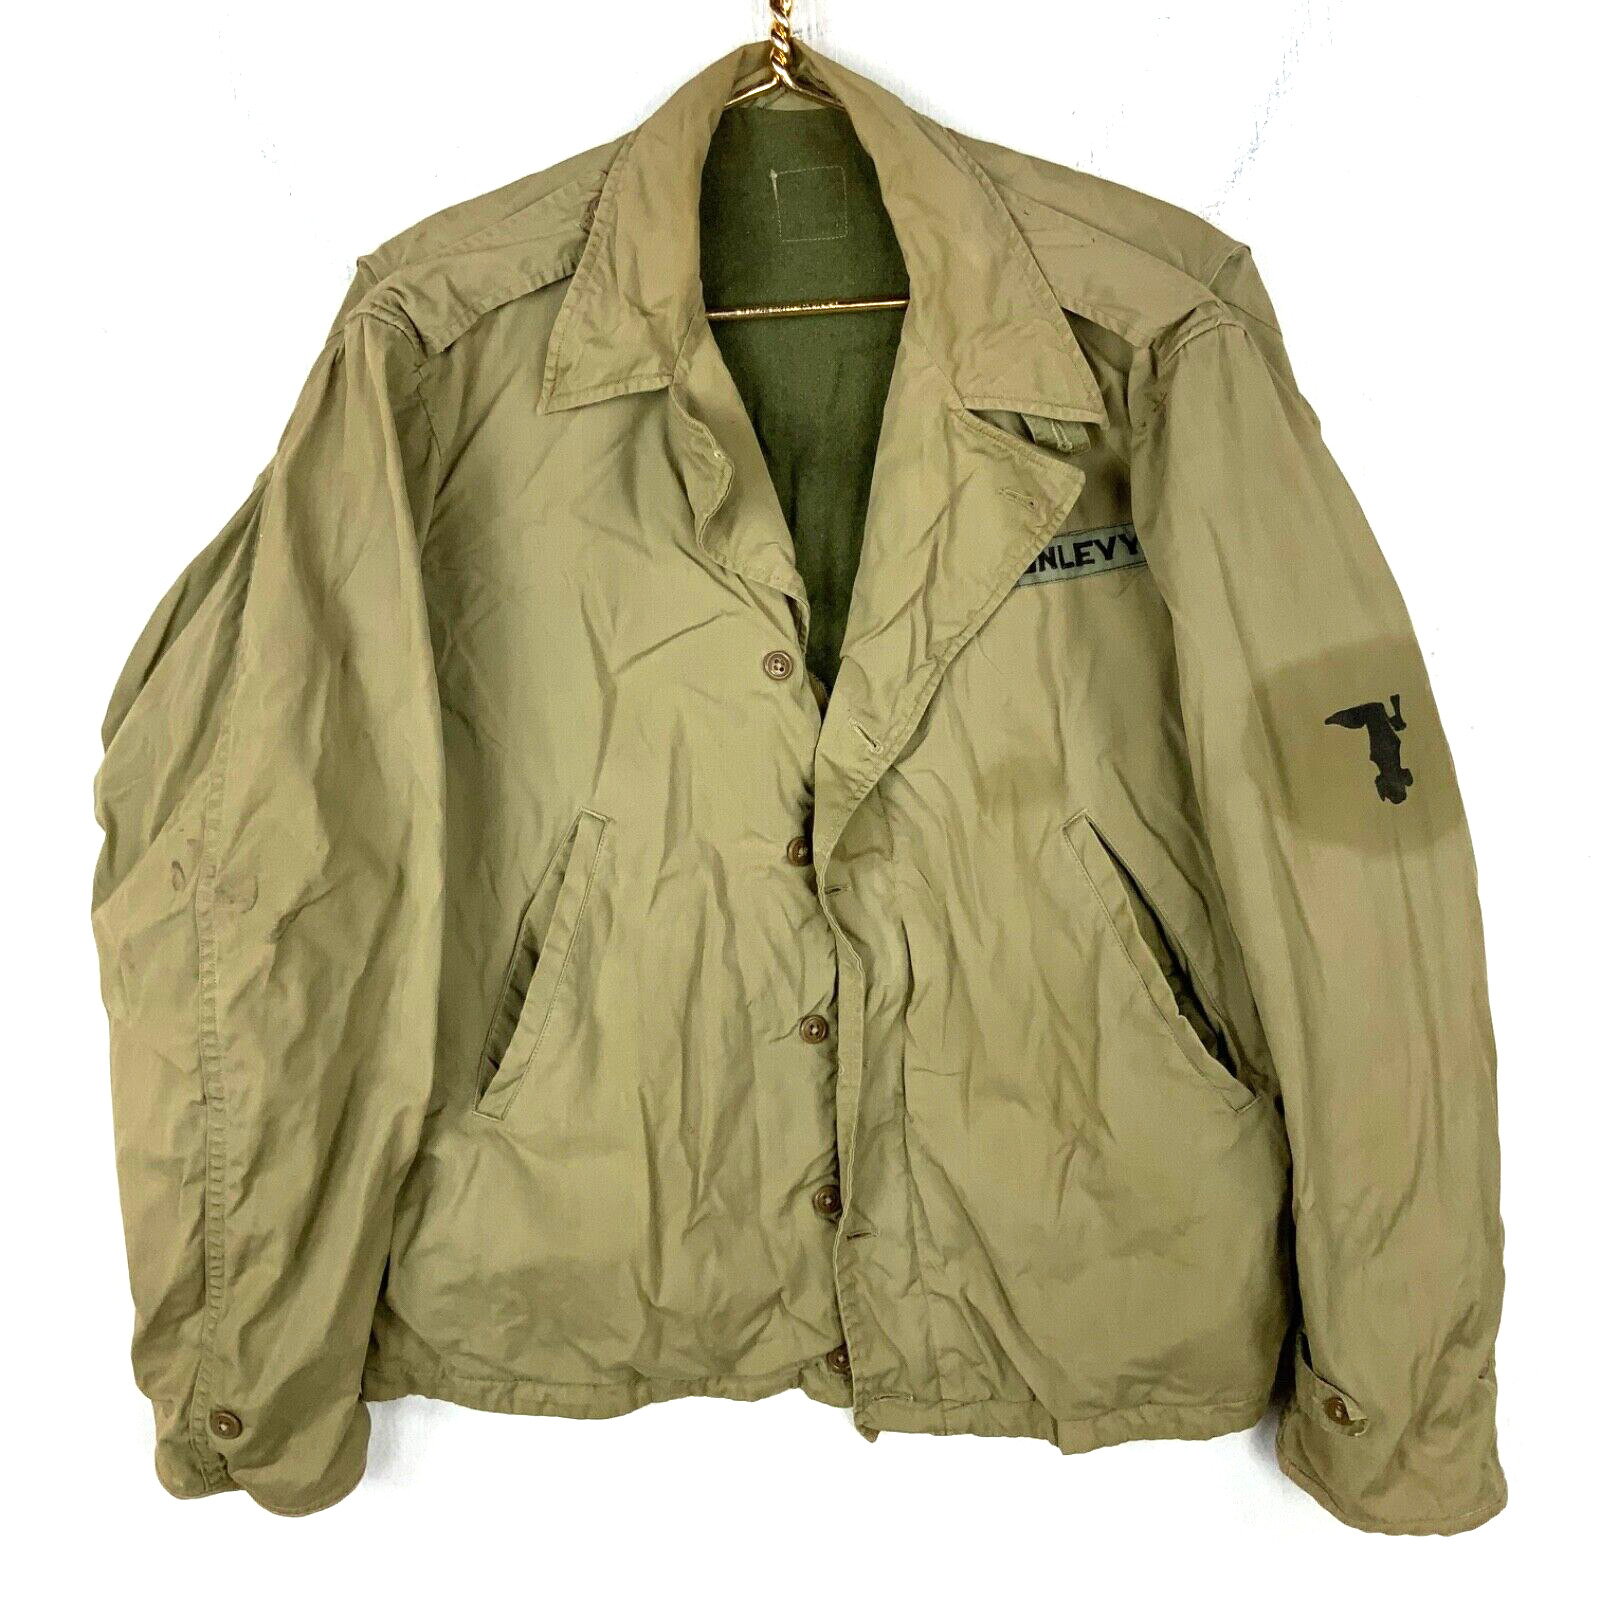 Vintage Military Jacket Lined Large Beige Button Up Full Zip Vietnam Era 70s